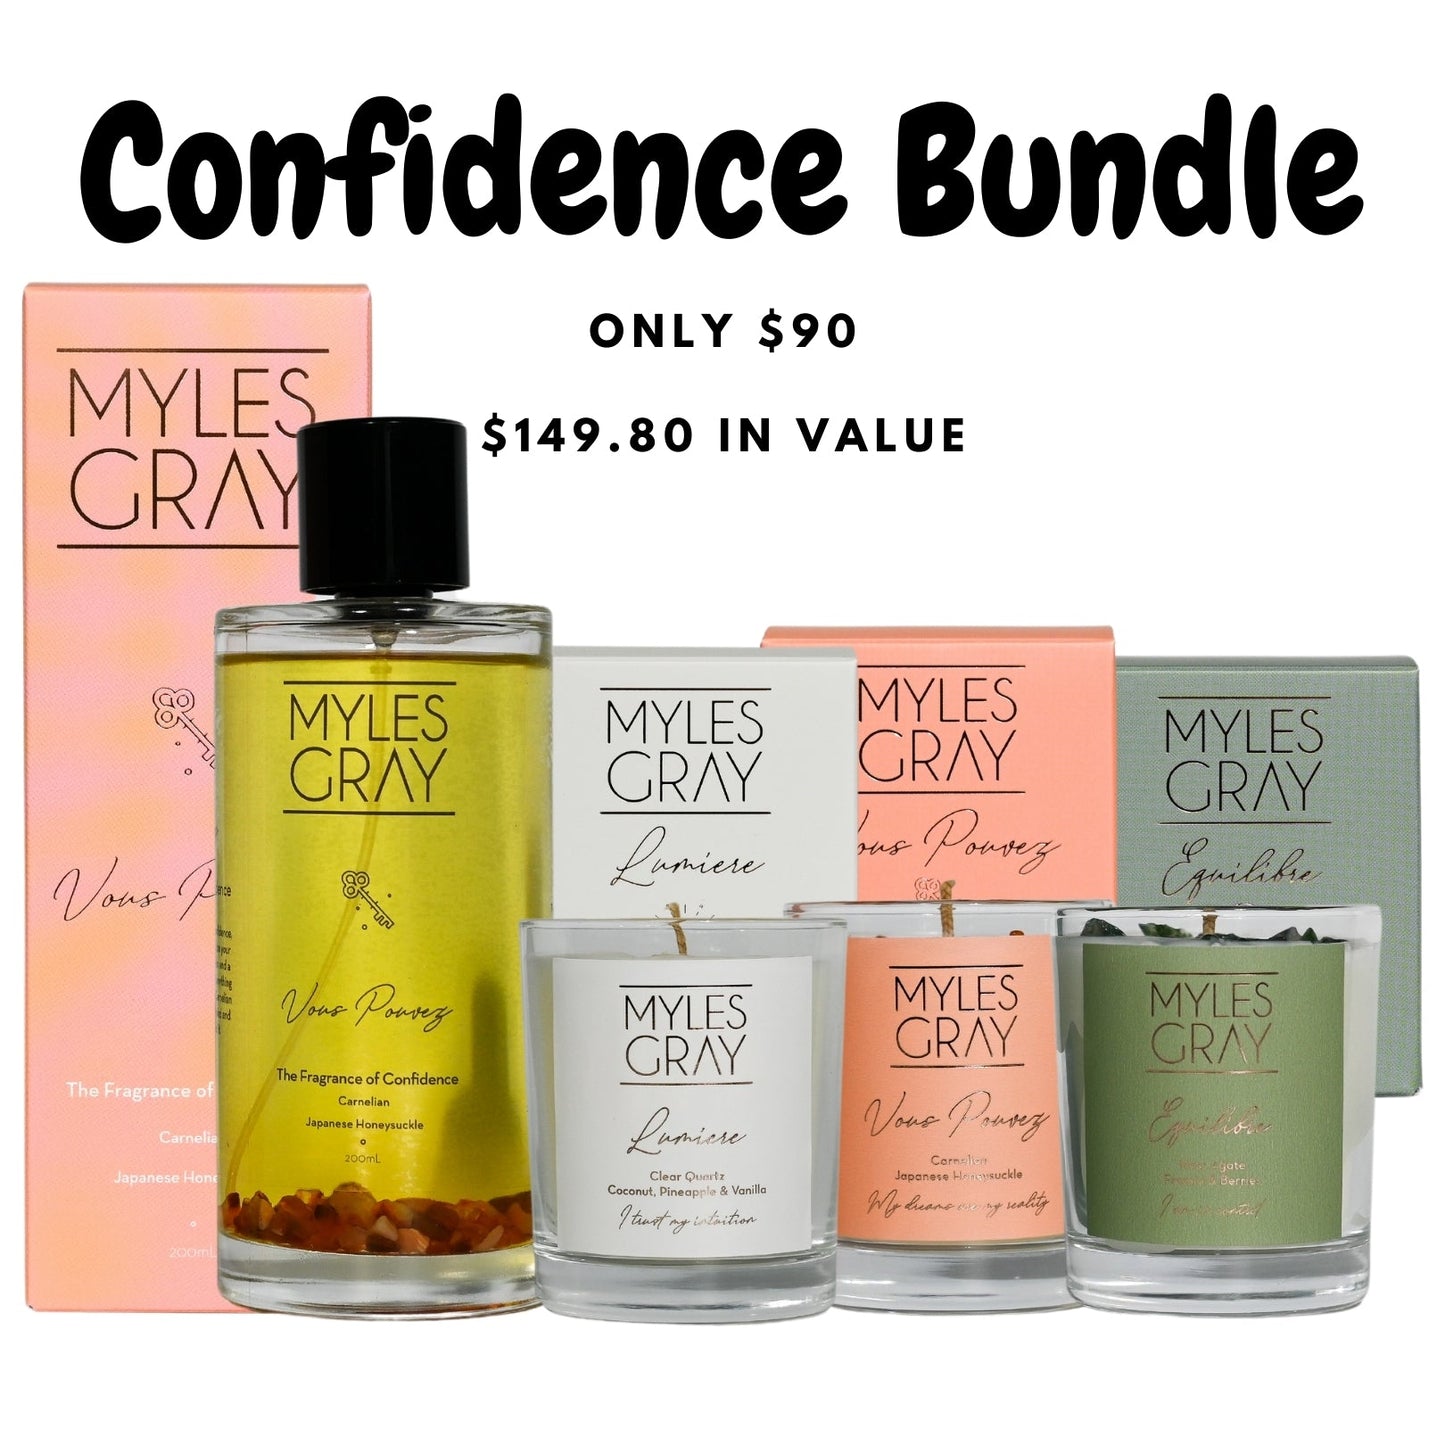 Confidence Bundle - Myles Gray